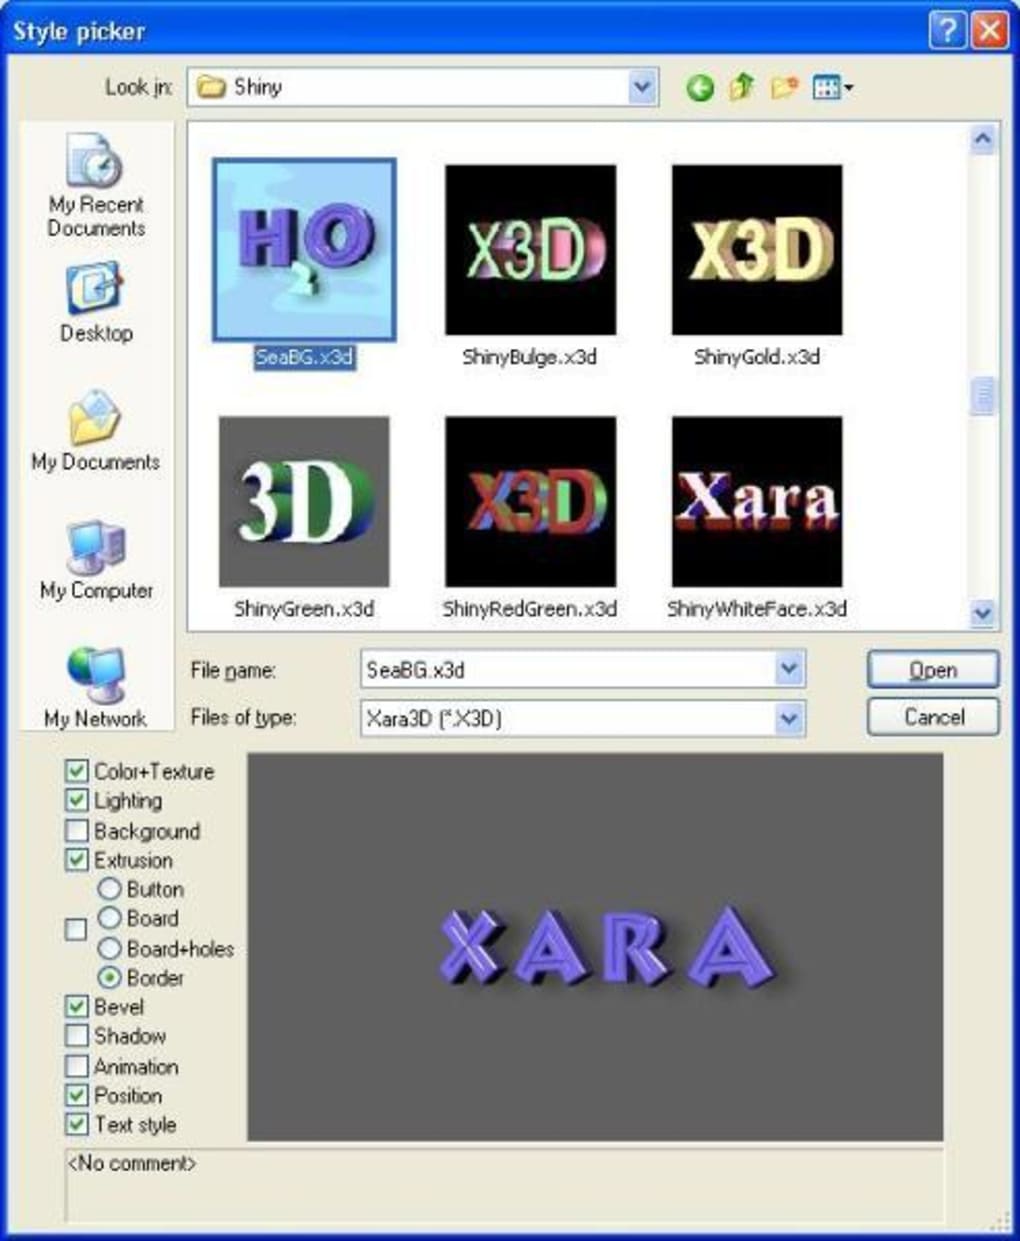 xara 3d maker 7 tutorial pdf